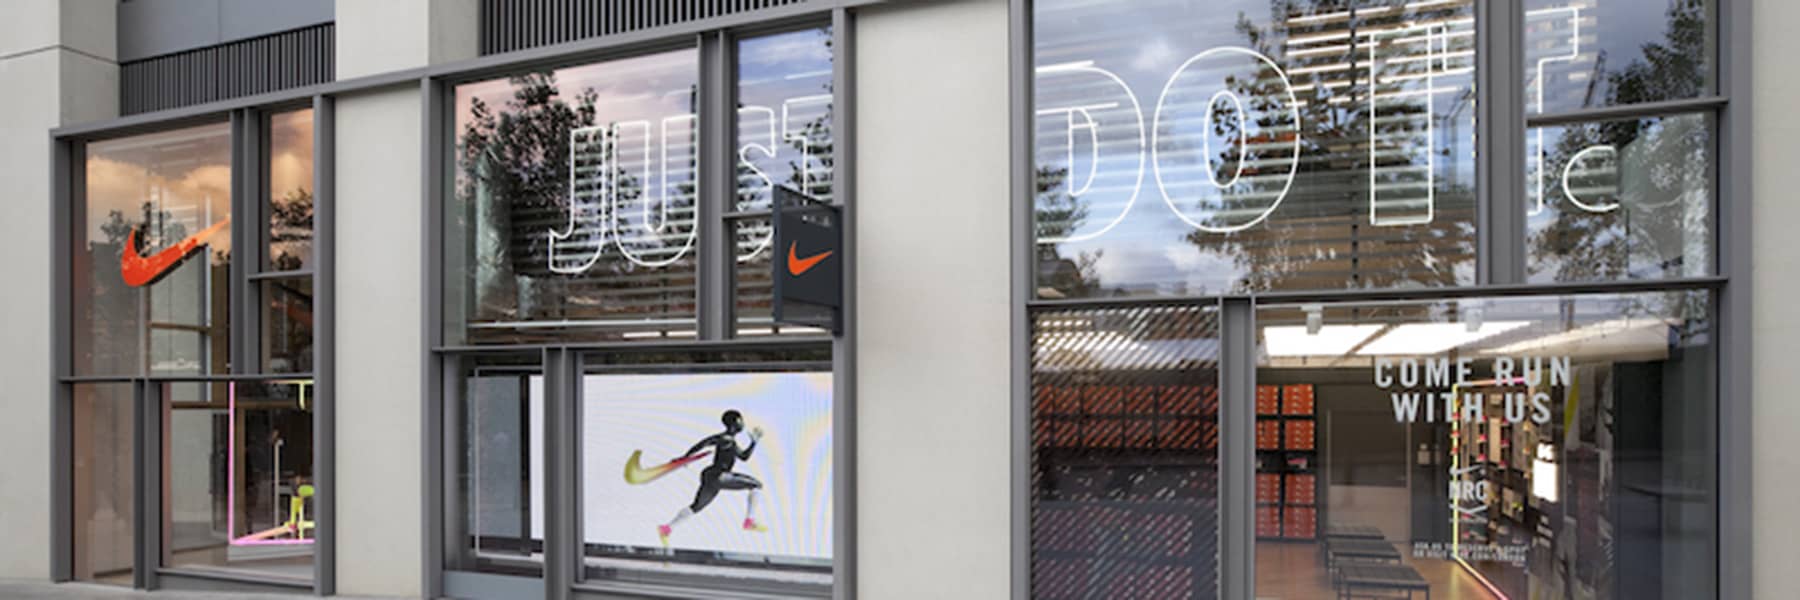 Sporten Om te mediteren Zuidelijk Nike Stores in Bavaria, Germany. Nike.com